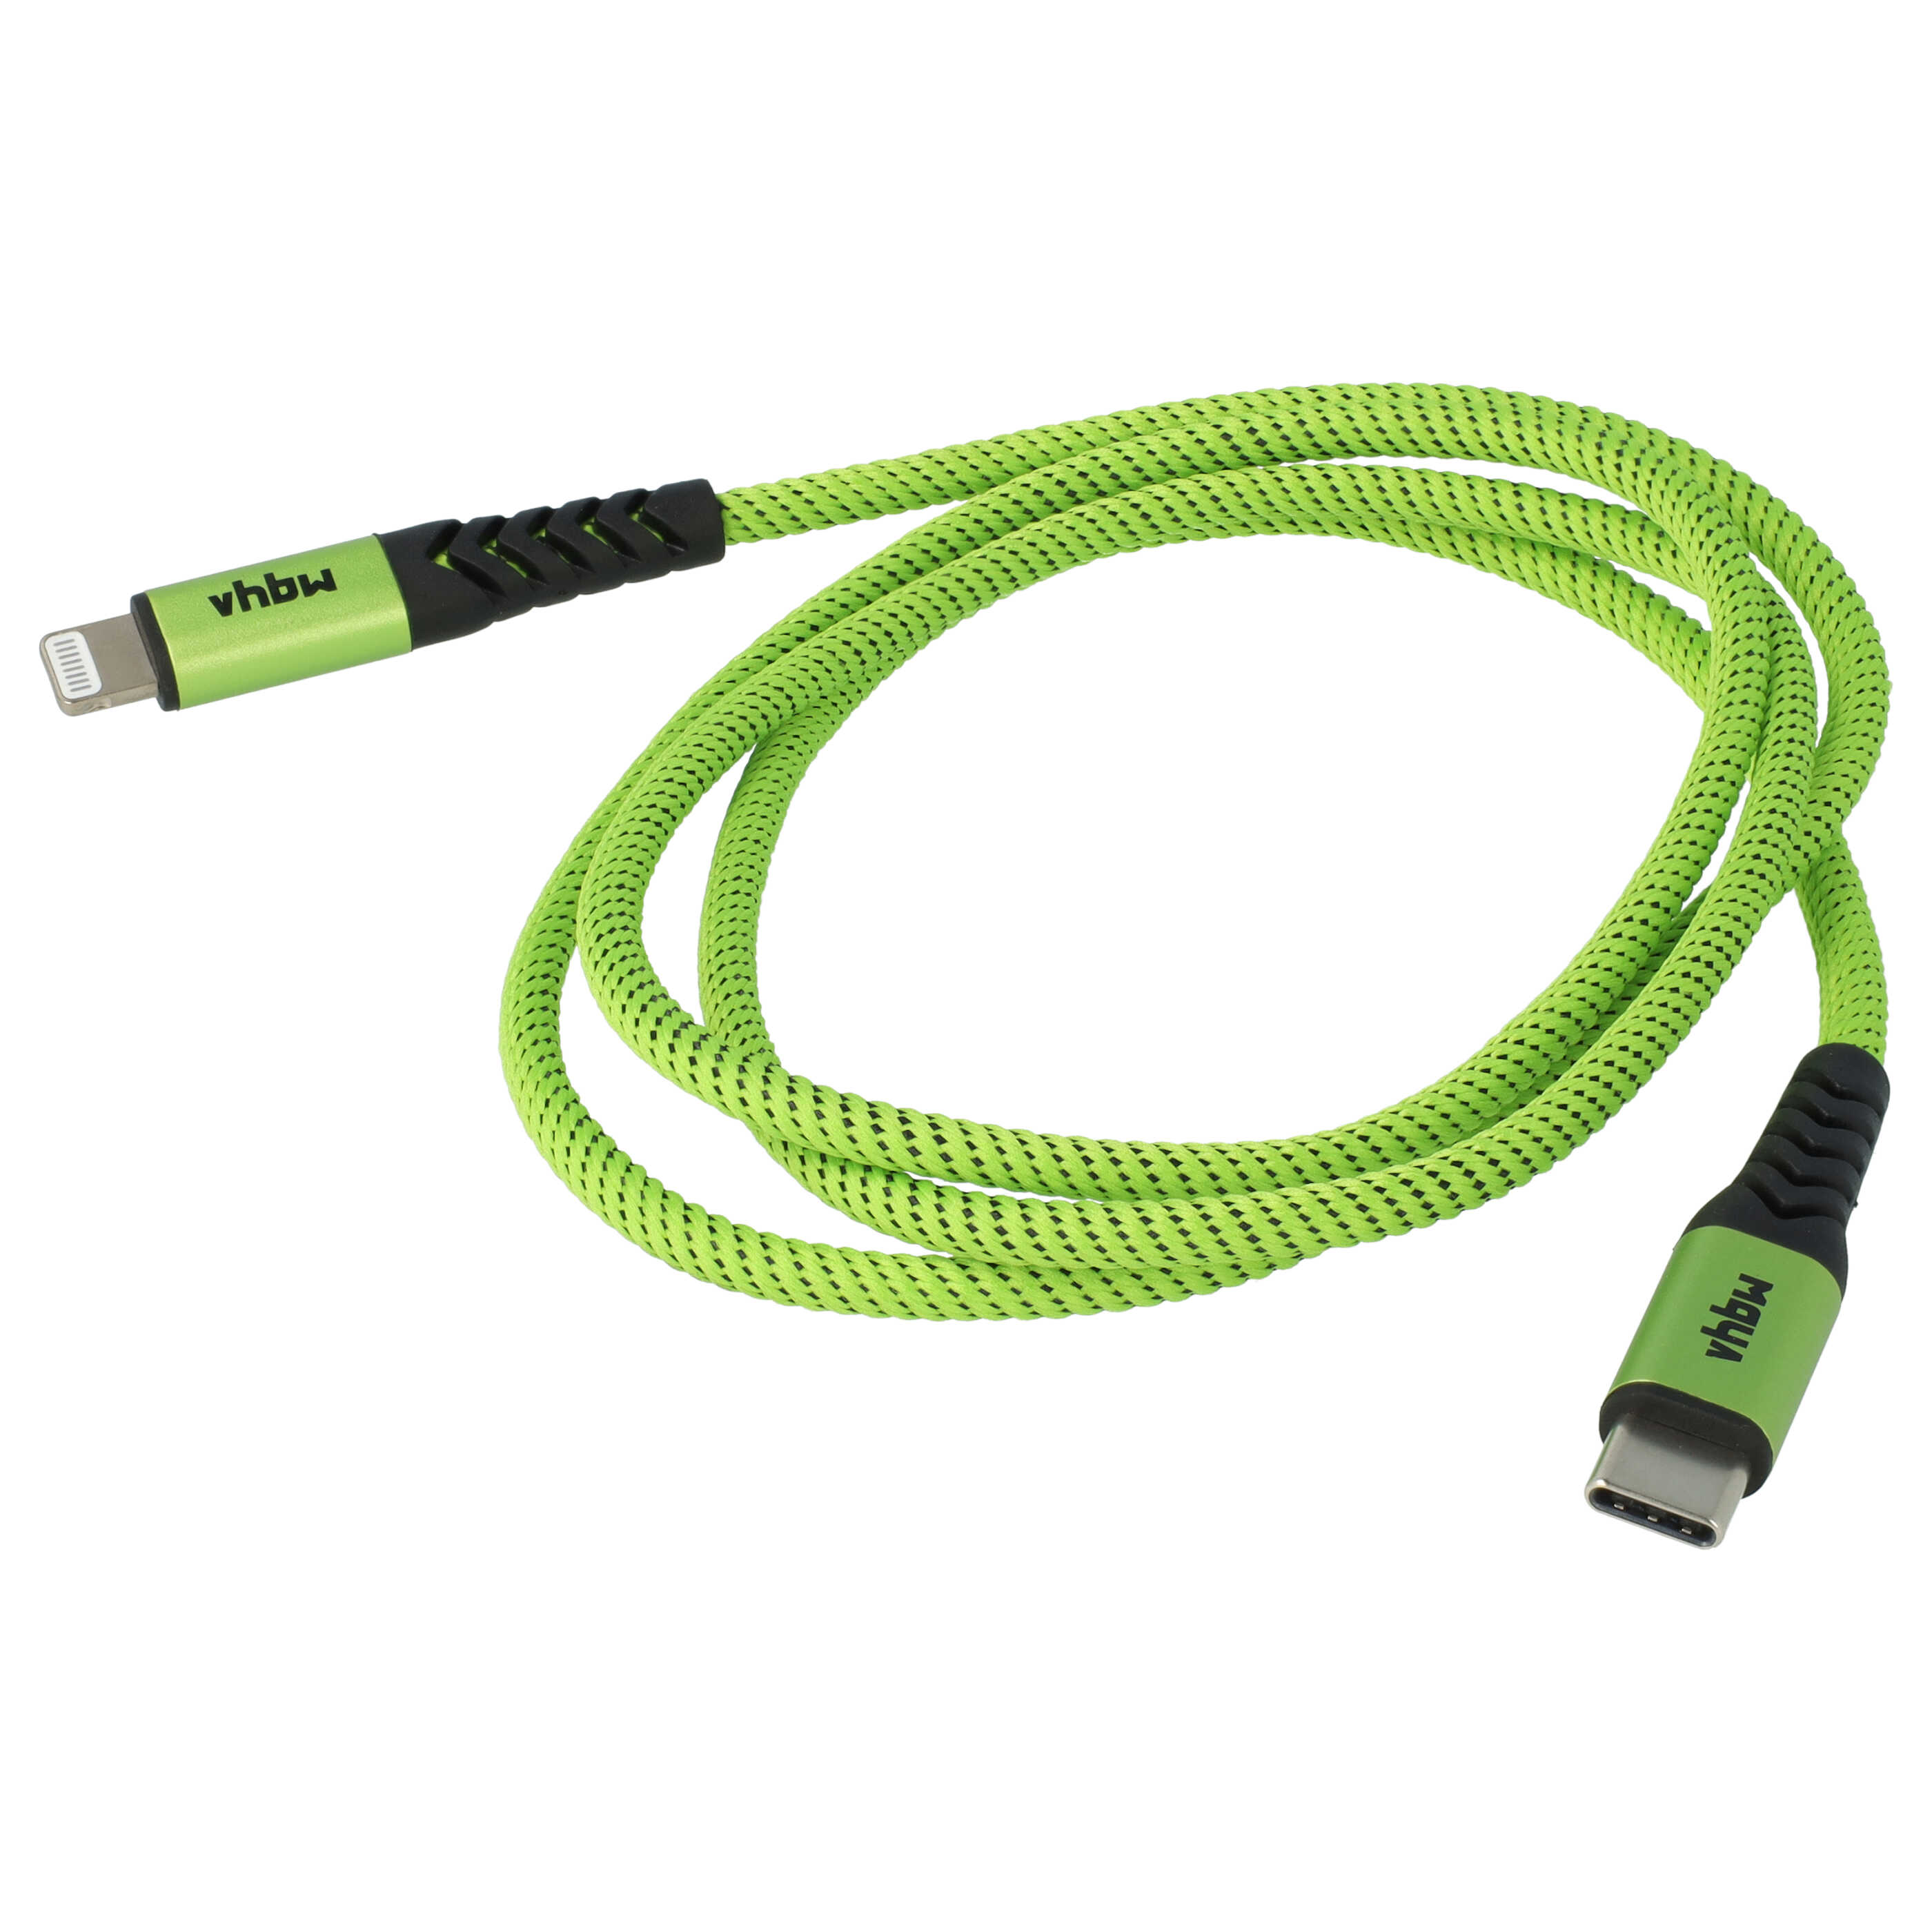 Cable lightning a USB C, Thunderbolt 3 para dispositivos Apple iOS - negro / verde, 100 cm